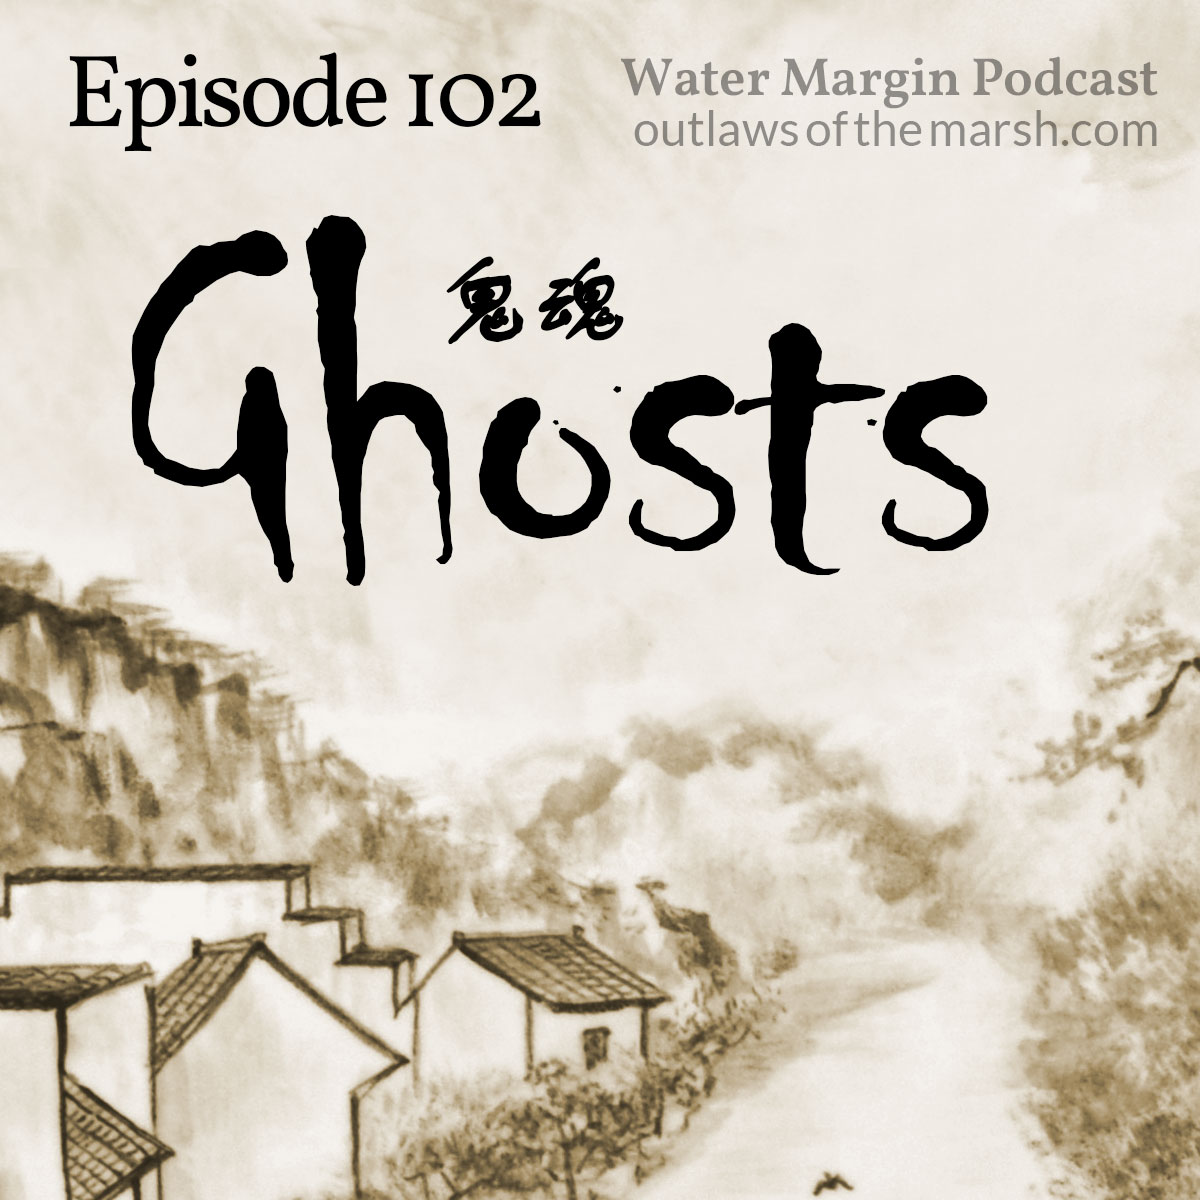 Water Margin Podcast: Episode 102